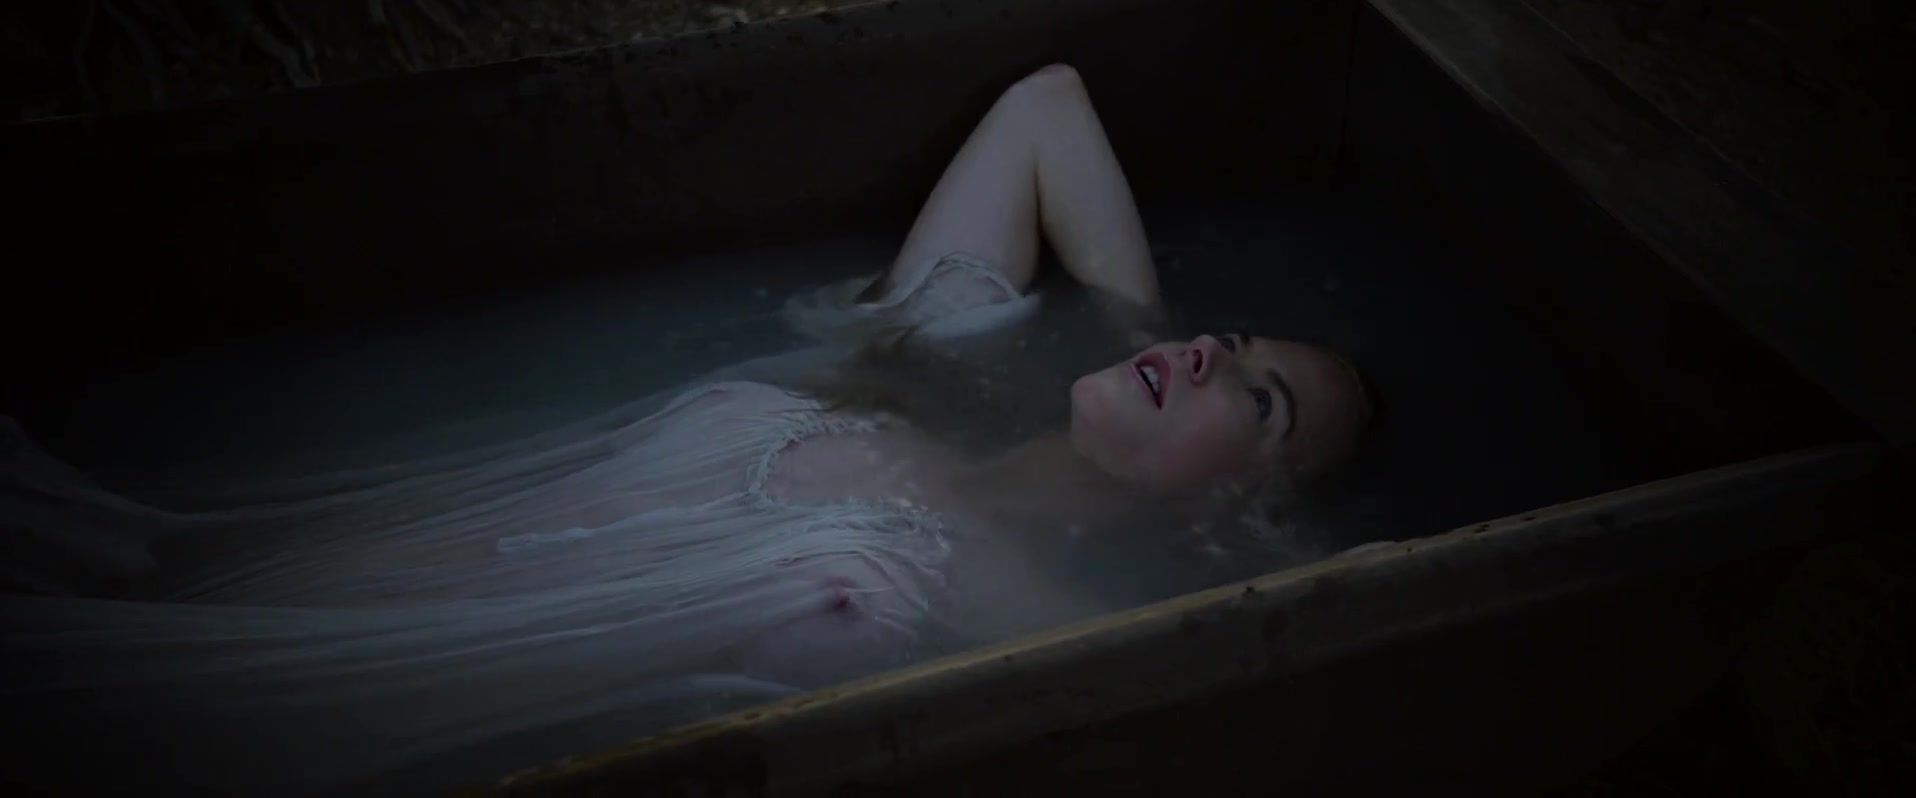 Hot Naked Girl Nicole Kidman nude - Queen of the Desert (2016) Mature Woman - 2